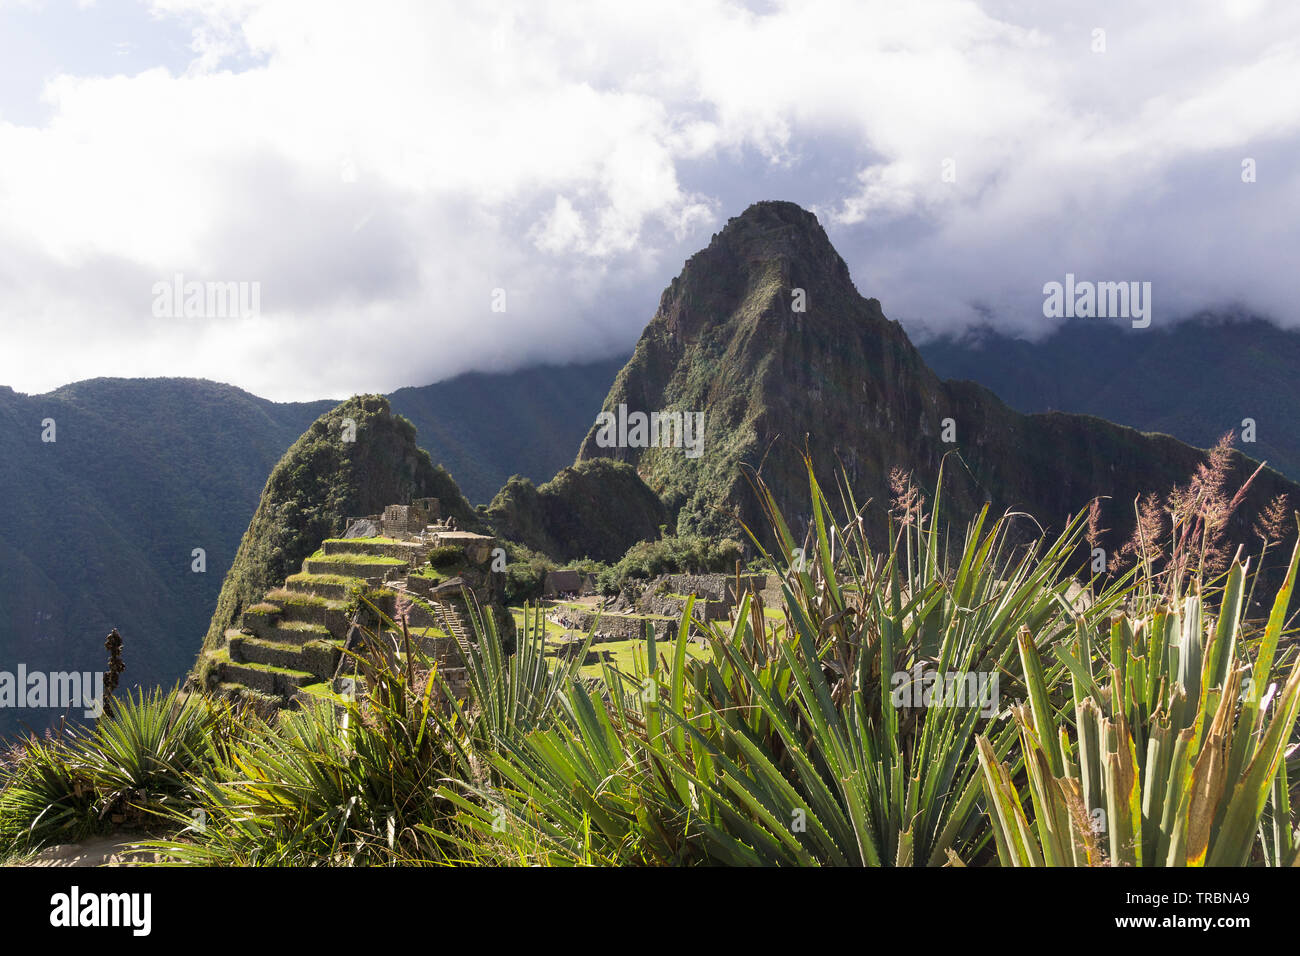 Machu Picchu Peru - der Huayna Picchu Berg ist das Wahrzeichen Peak bei Zitadelle Machu Picchu in Peru, Südamerika. Stockfoto